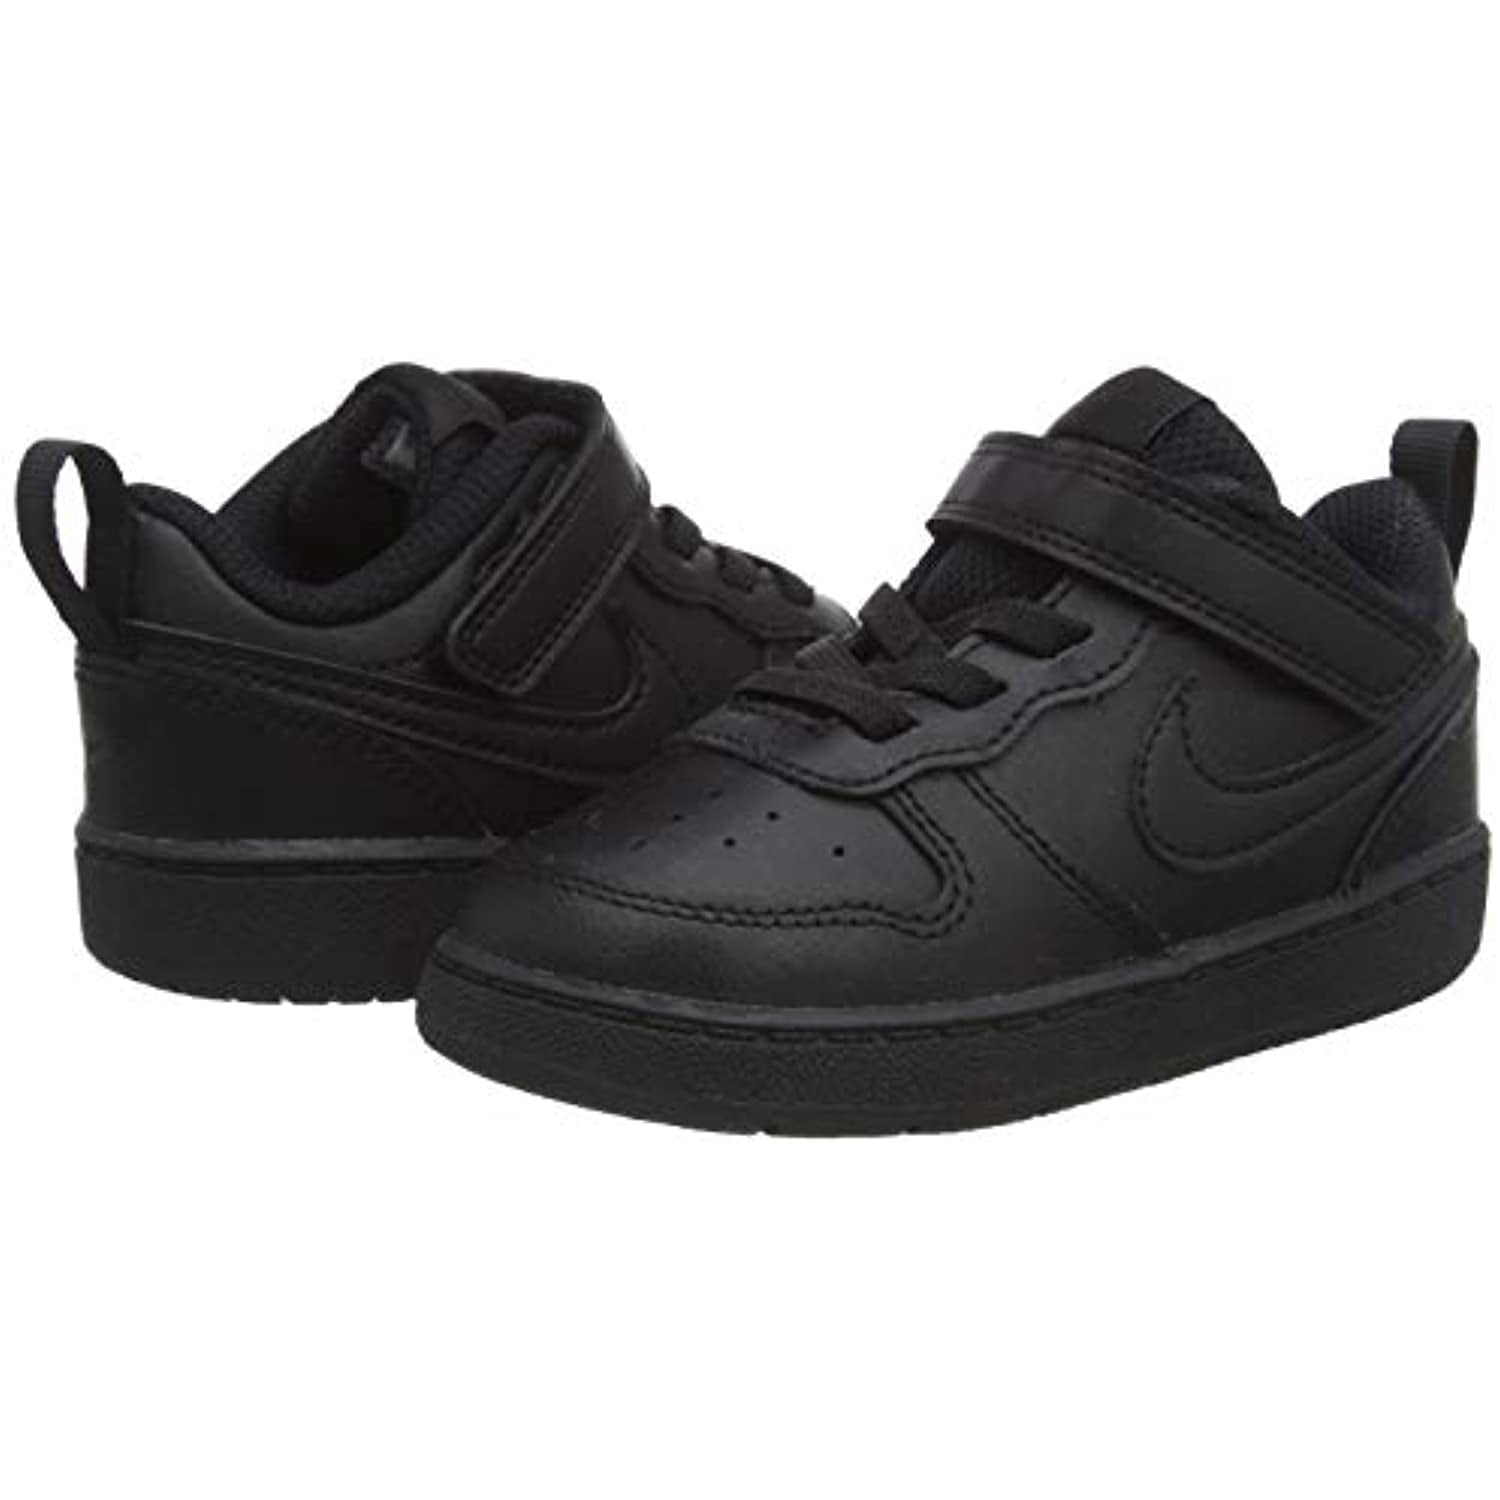 Size Borough Nike (TDV) Black/Black/Black Toddler Bq5453-001 Low 2 9 Court